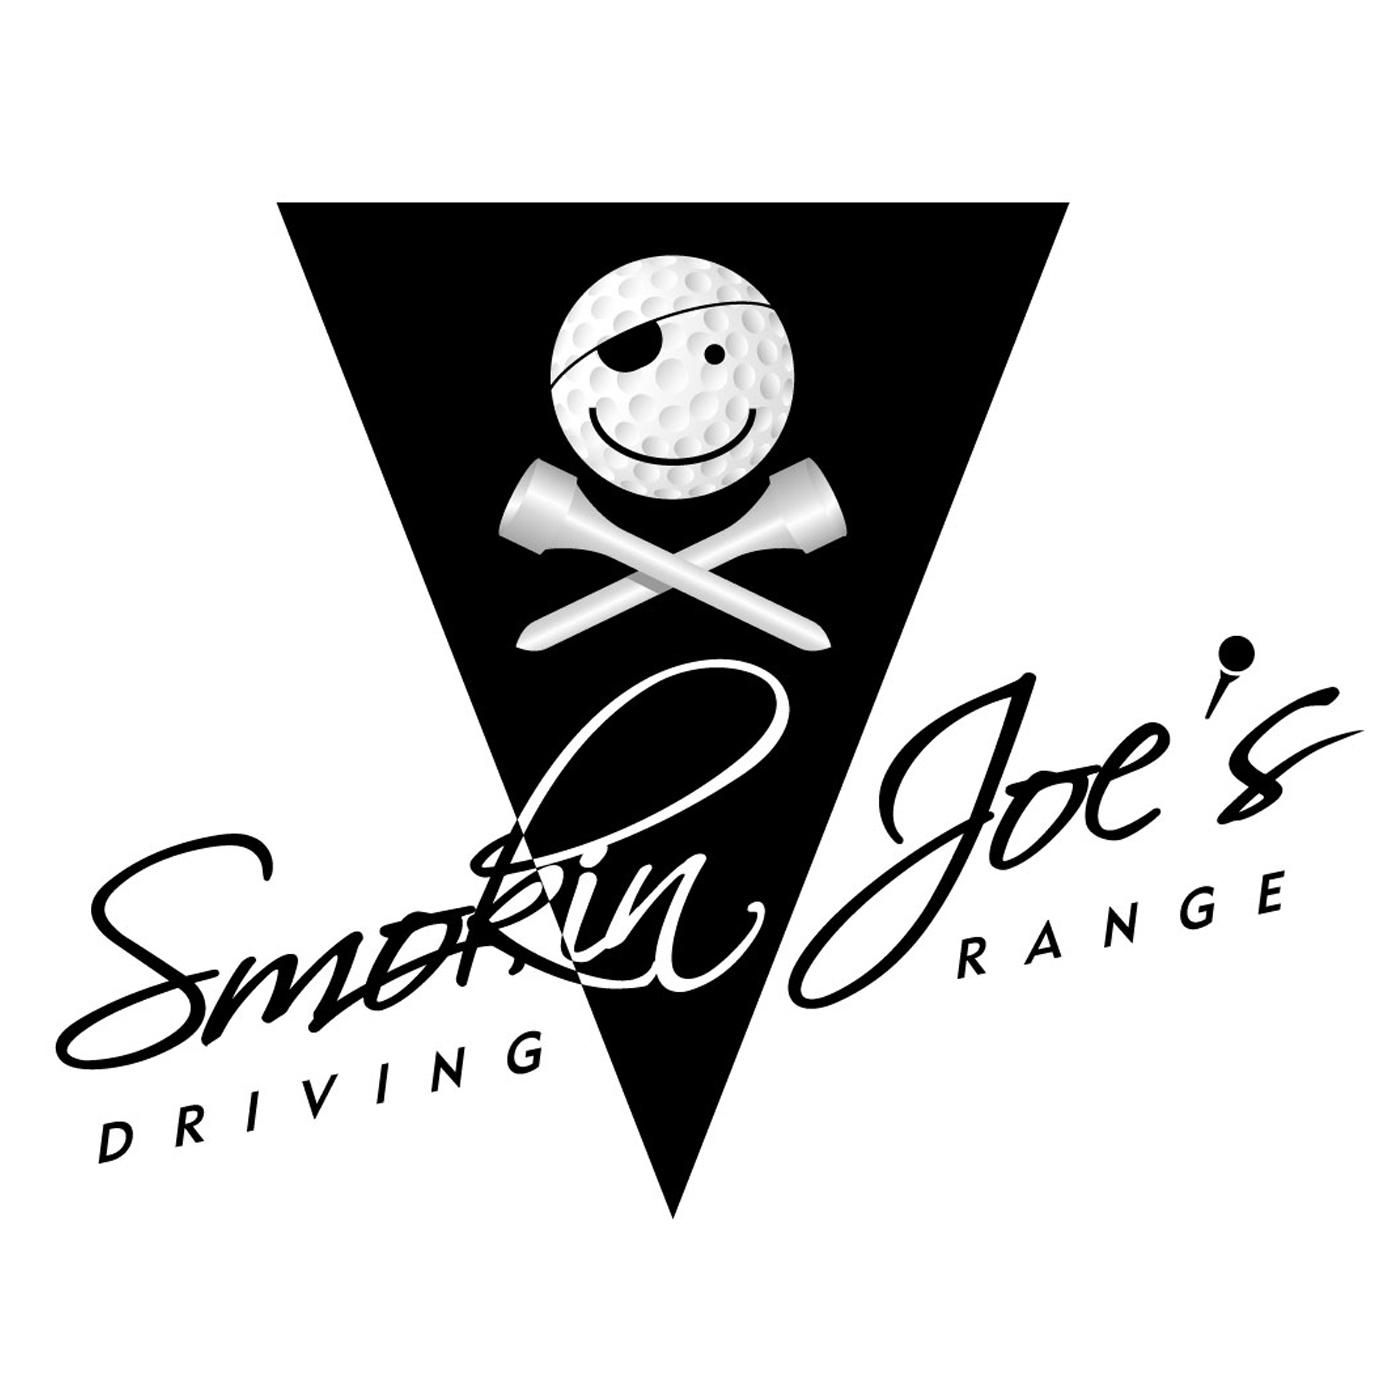 Smokin’ Joe’s Driving Range